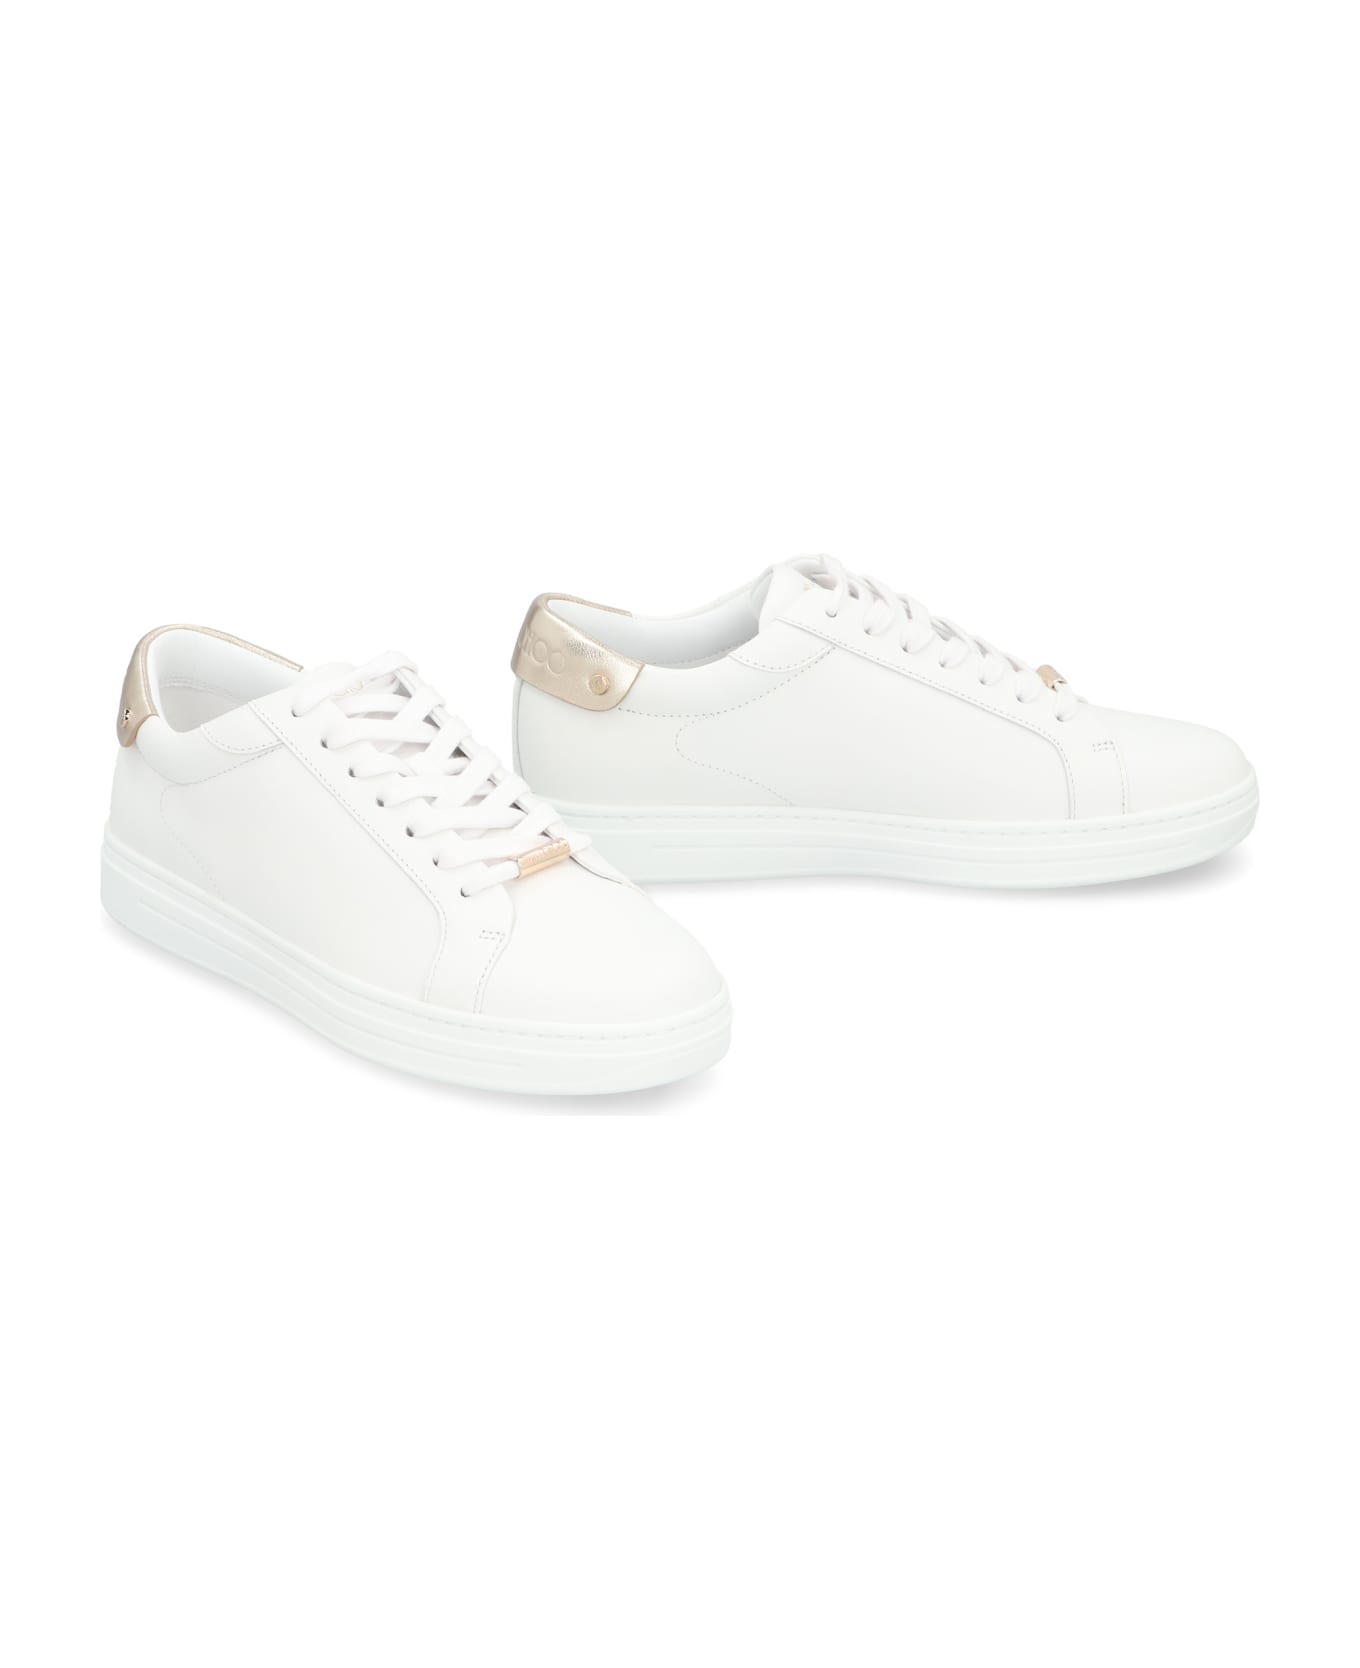 Jimmy Choo Rome/f Leather Sneakers - White